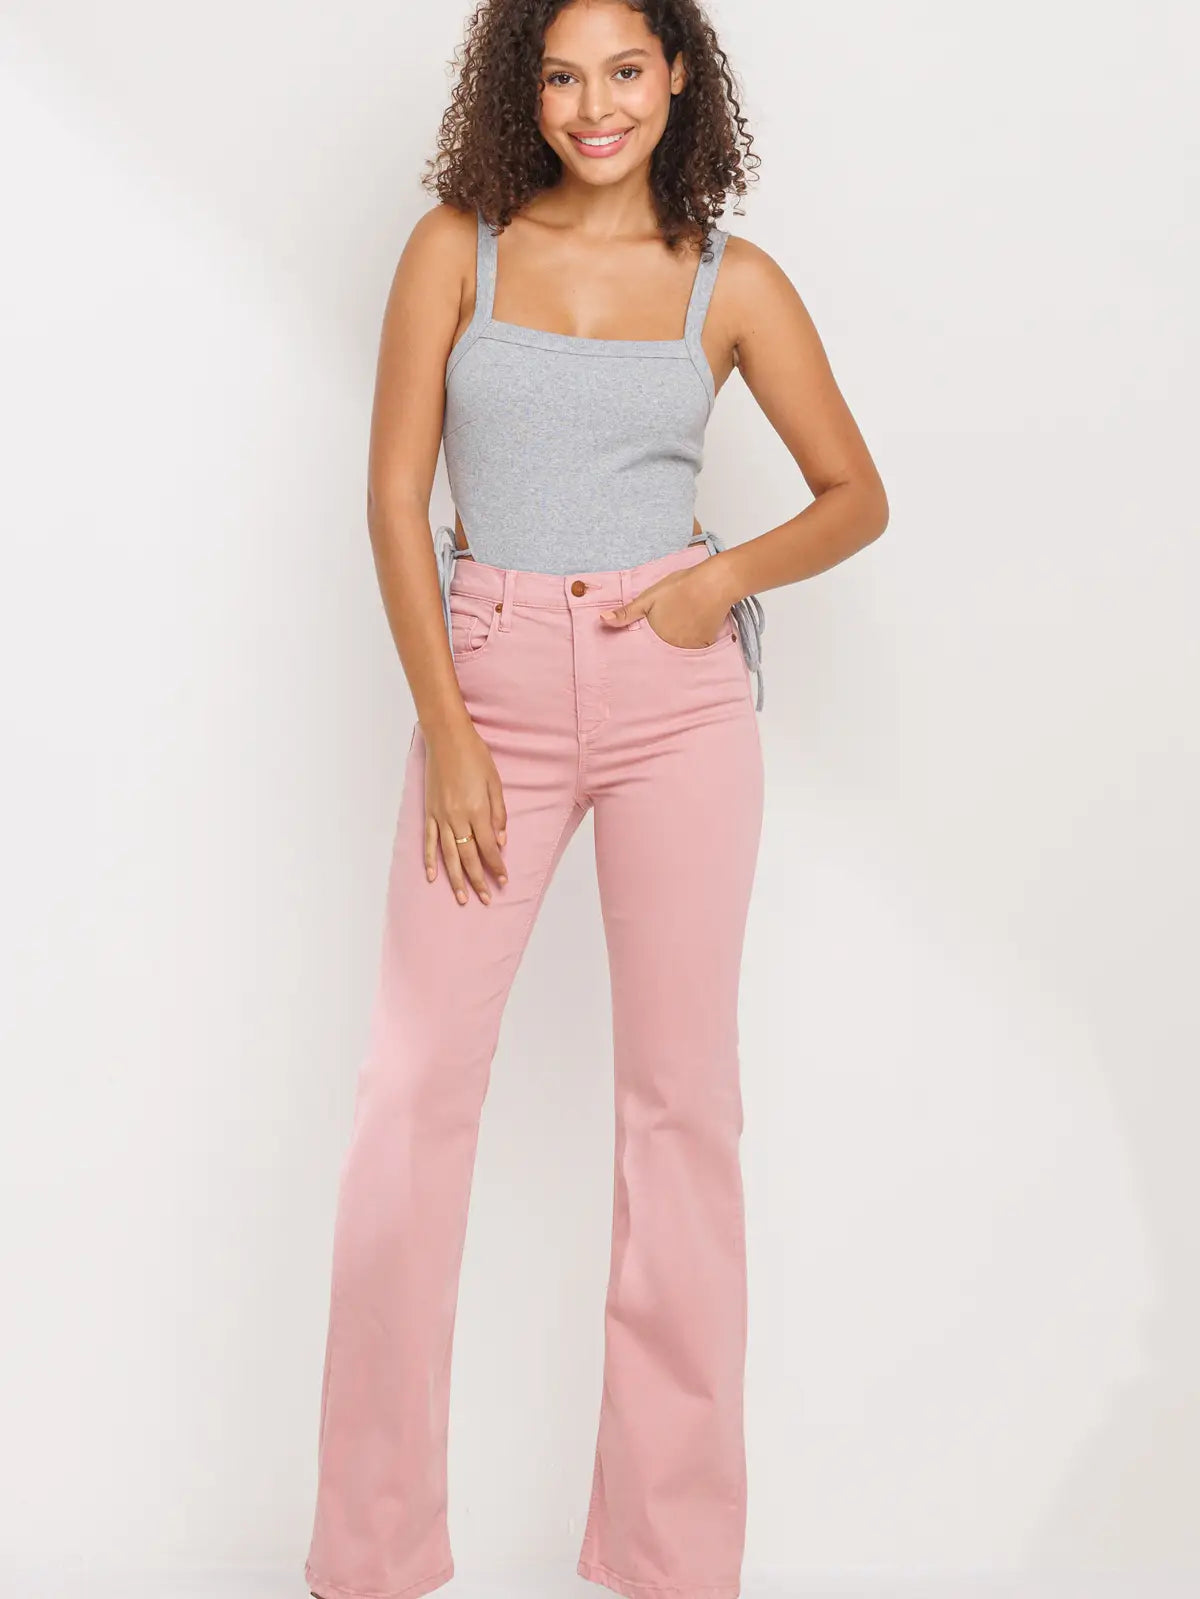 SneakPeek pink high rise bootcut jeans